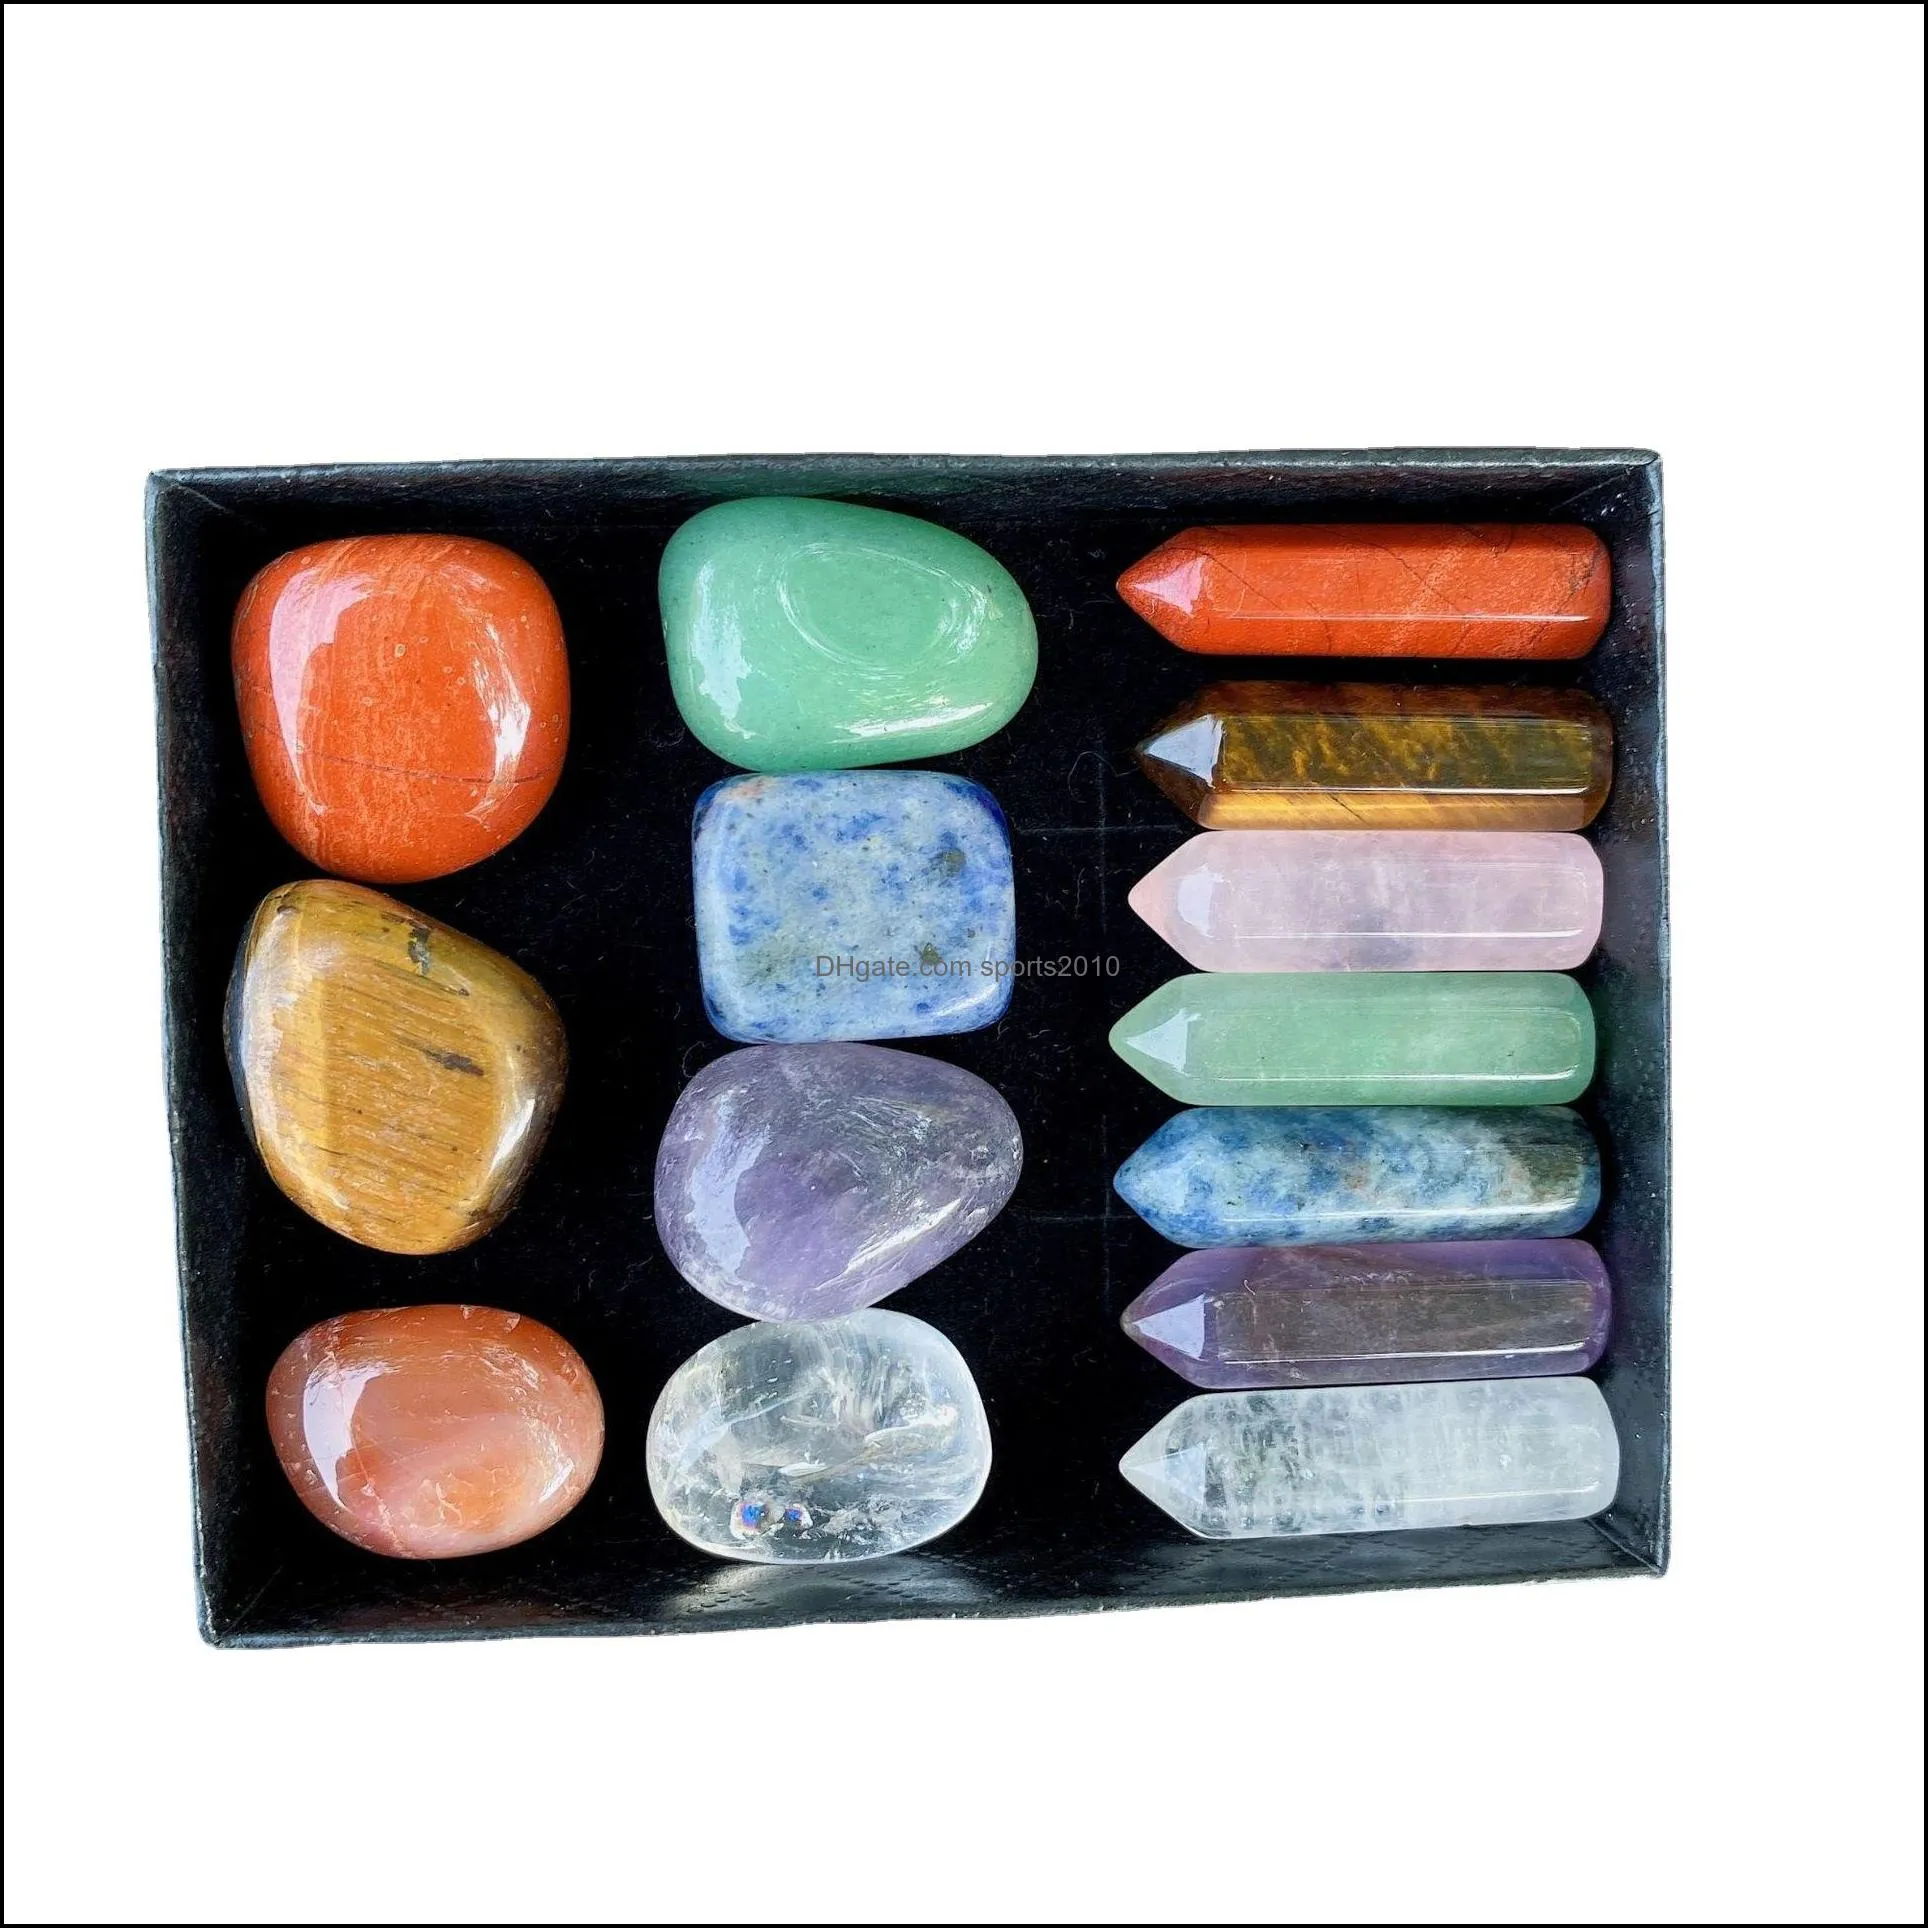 7 chakra box set reiki natural stone crystal stones ornaments hexagon prism quartz yoga energy bead healing art craft decor sports2010